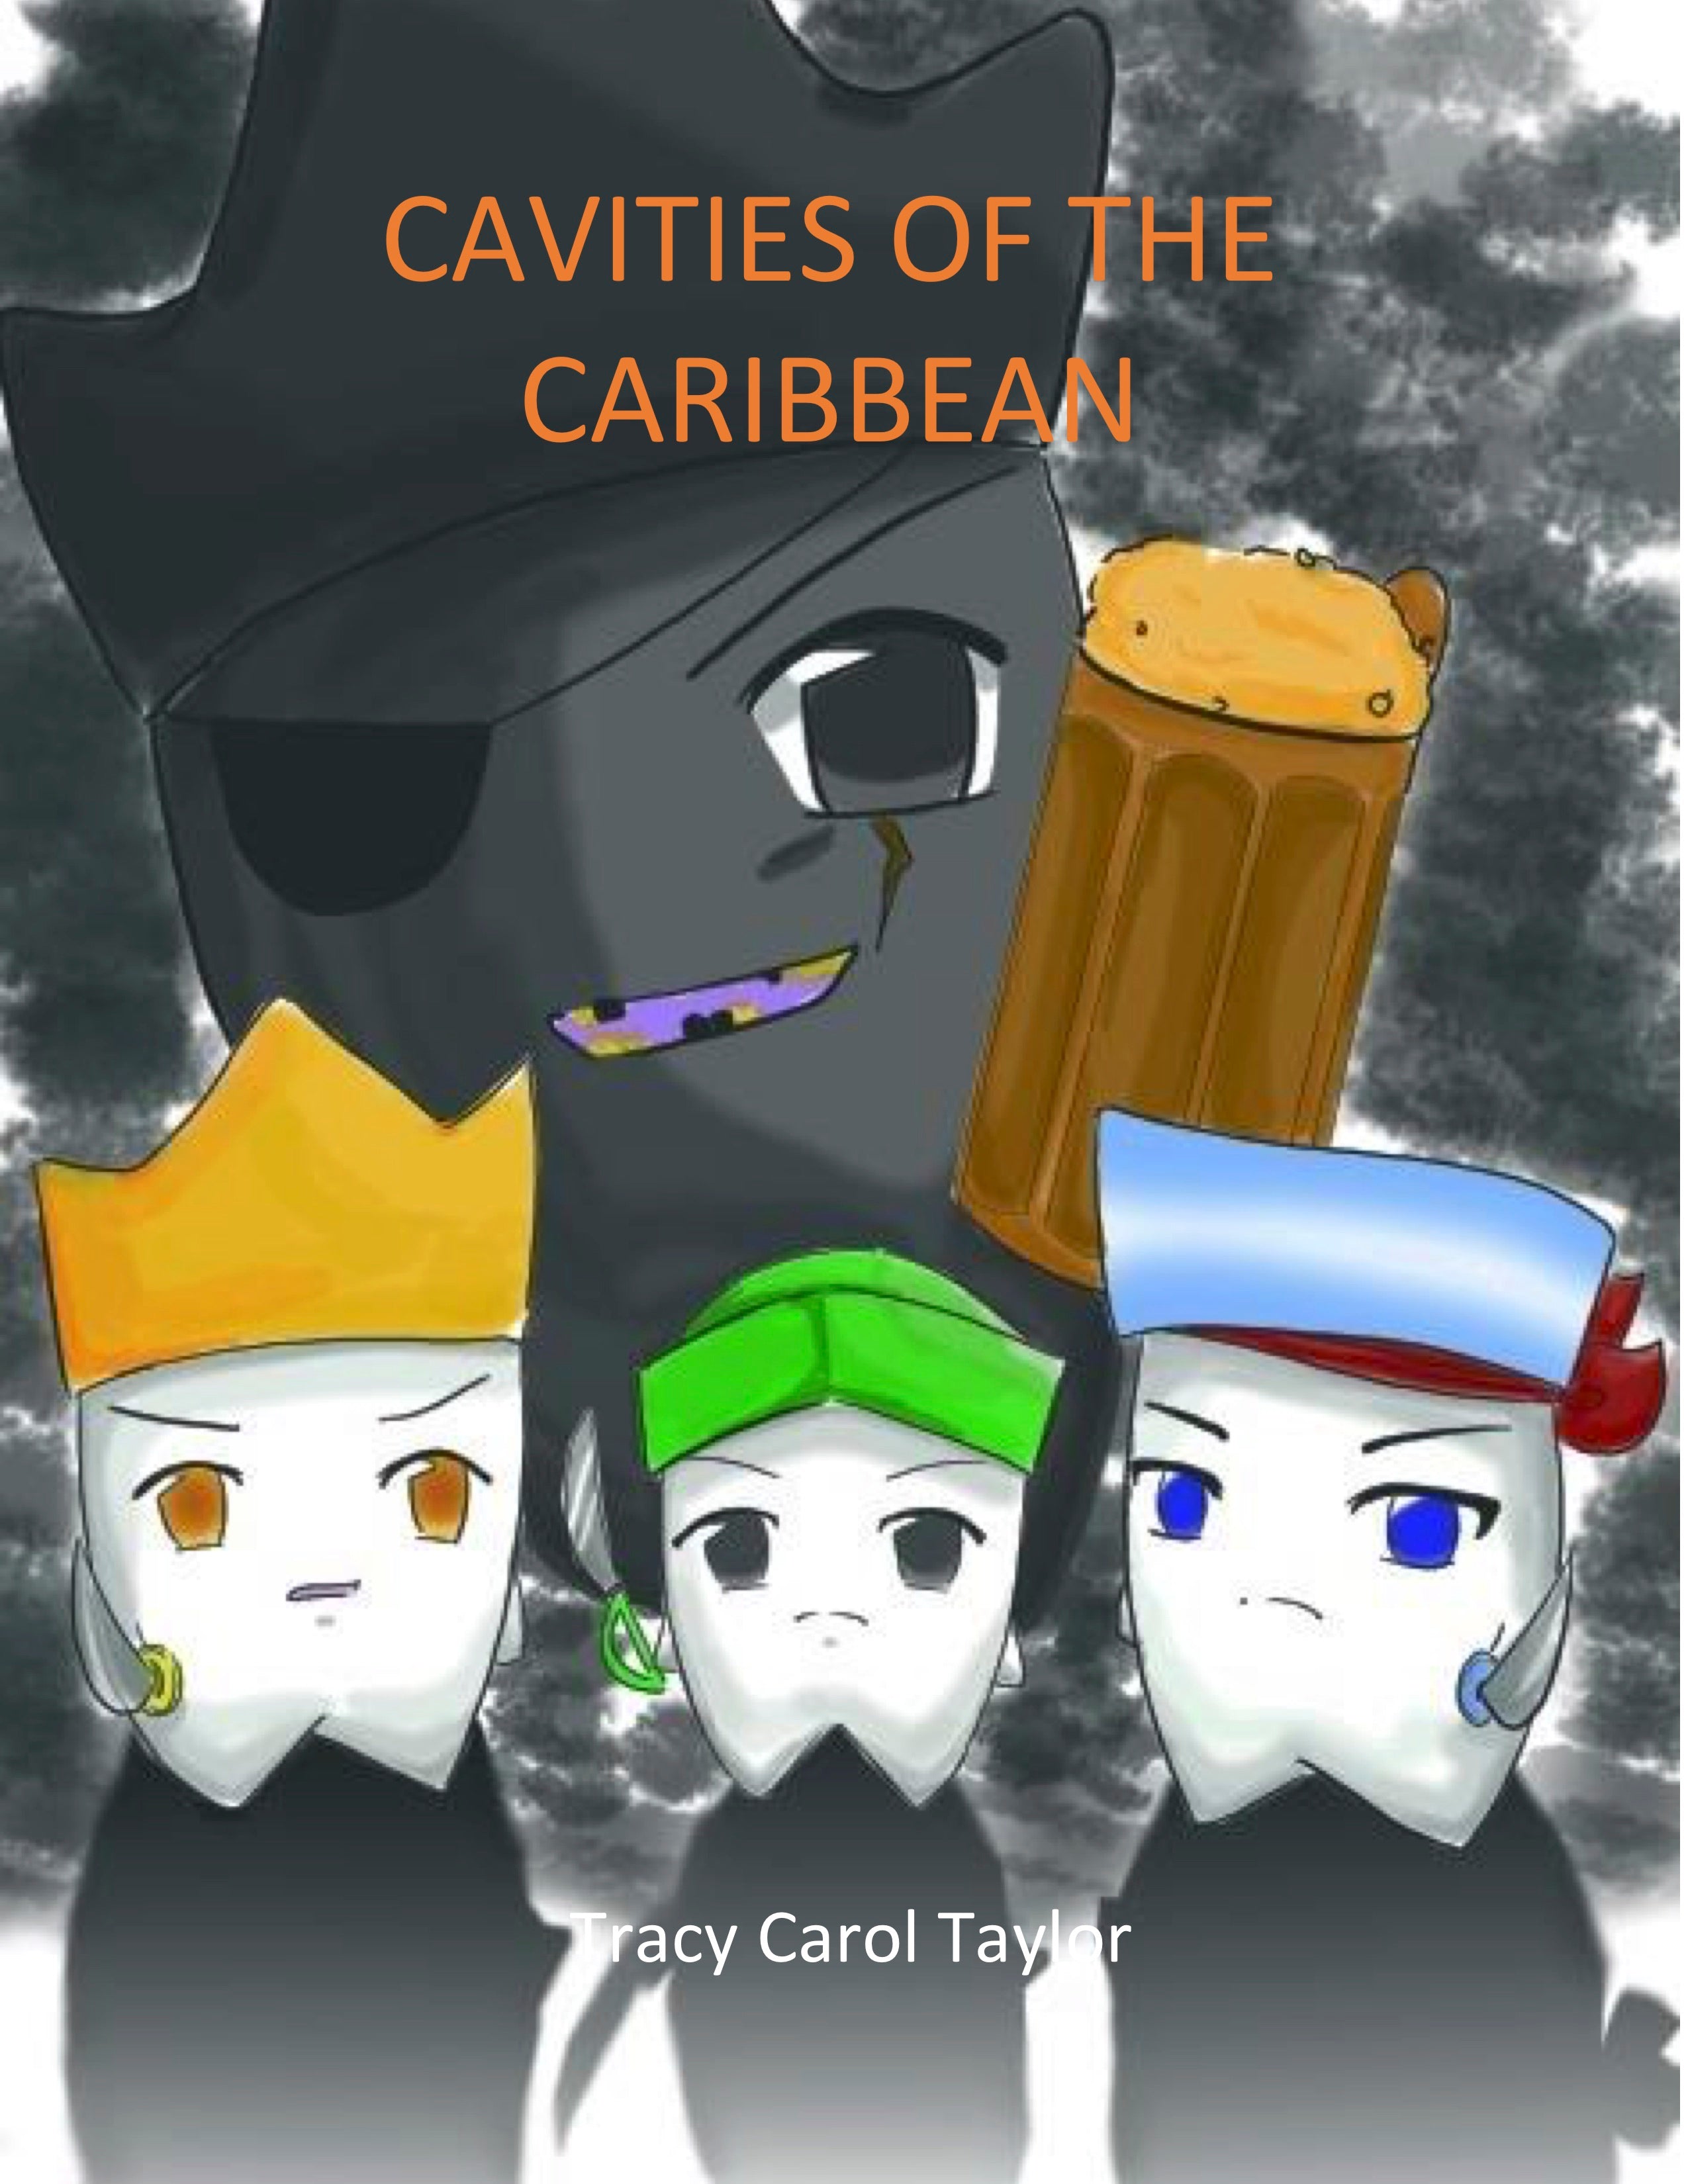 Cavities of the Caribbean - Juvenile Fiction / Children's Books / Dental Fiction